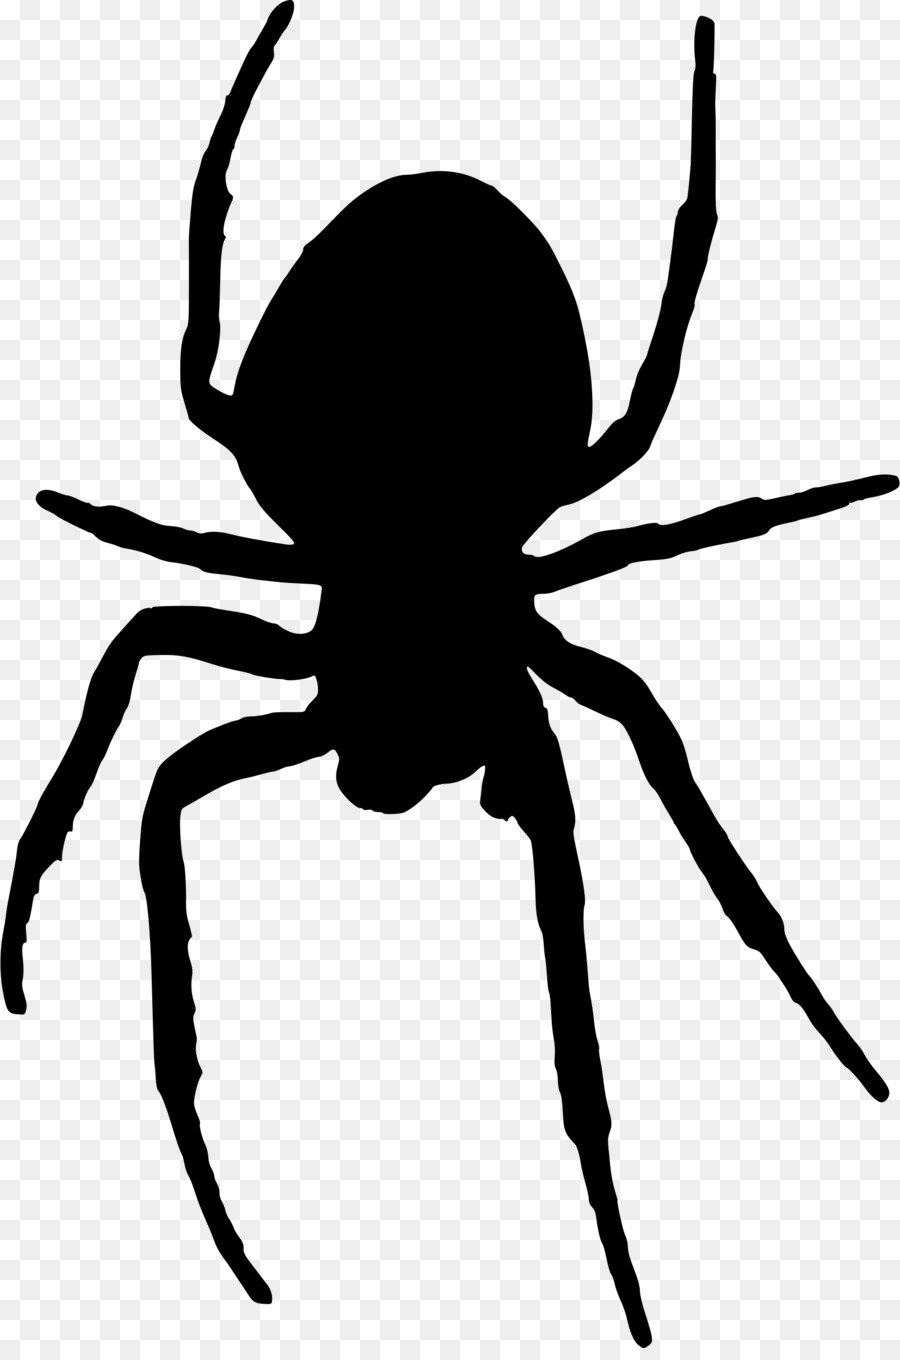 Spider Computer Icons Clip art - spider web png download - 1602*2400 - Free Transparent Spider png Download.